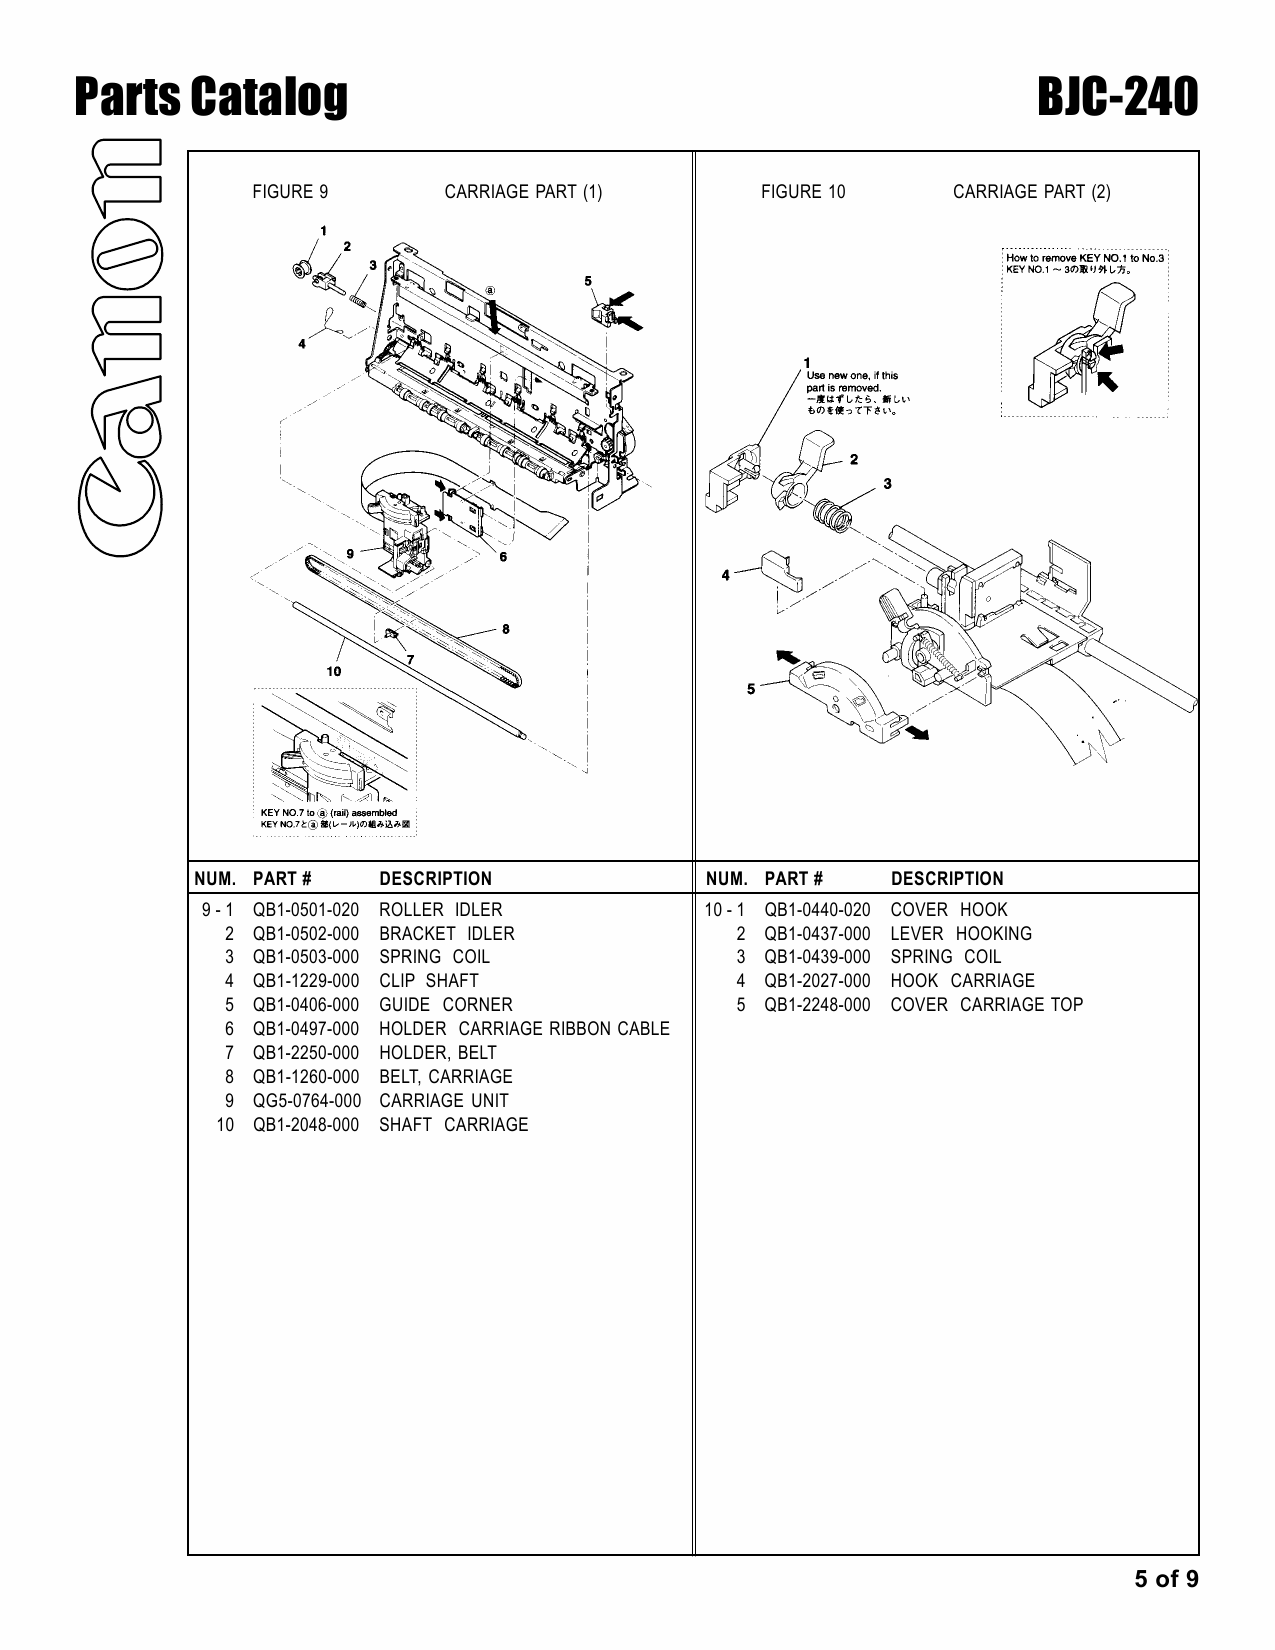 Canon BubbleJet BJC-240 Parts Catalog Manual-5